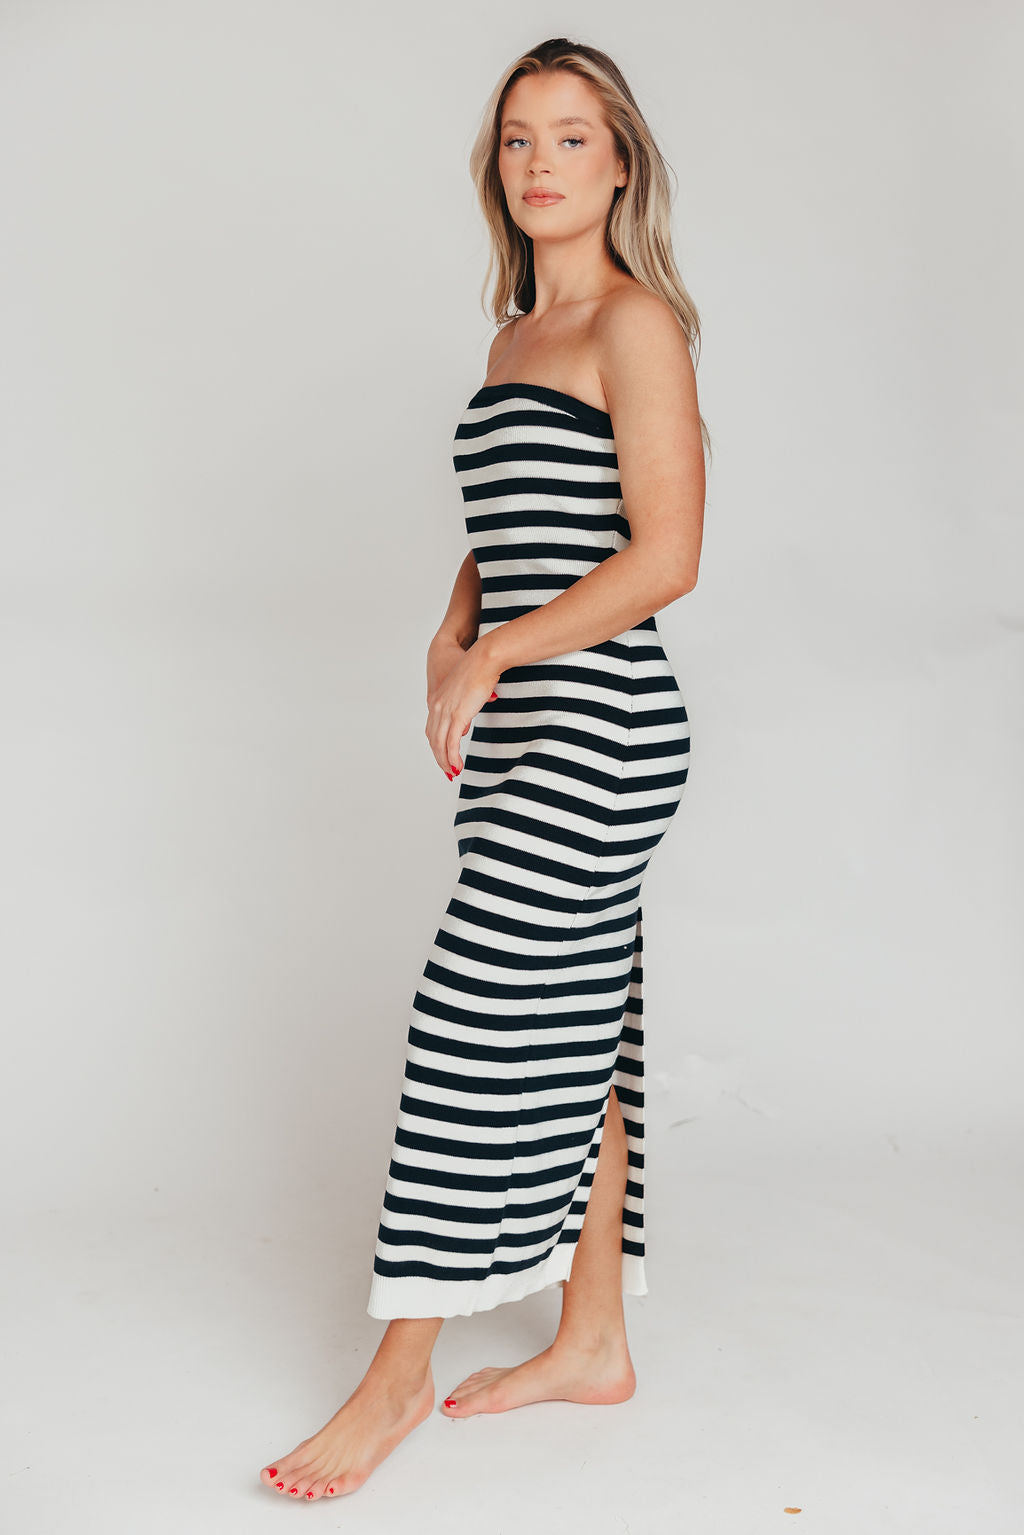 Eventide Maxi Dress in Navy / Ivory Stripe